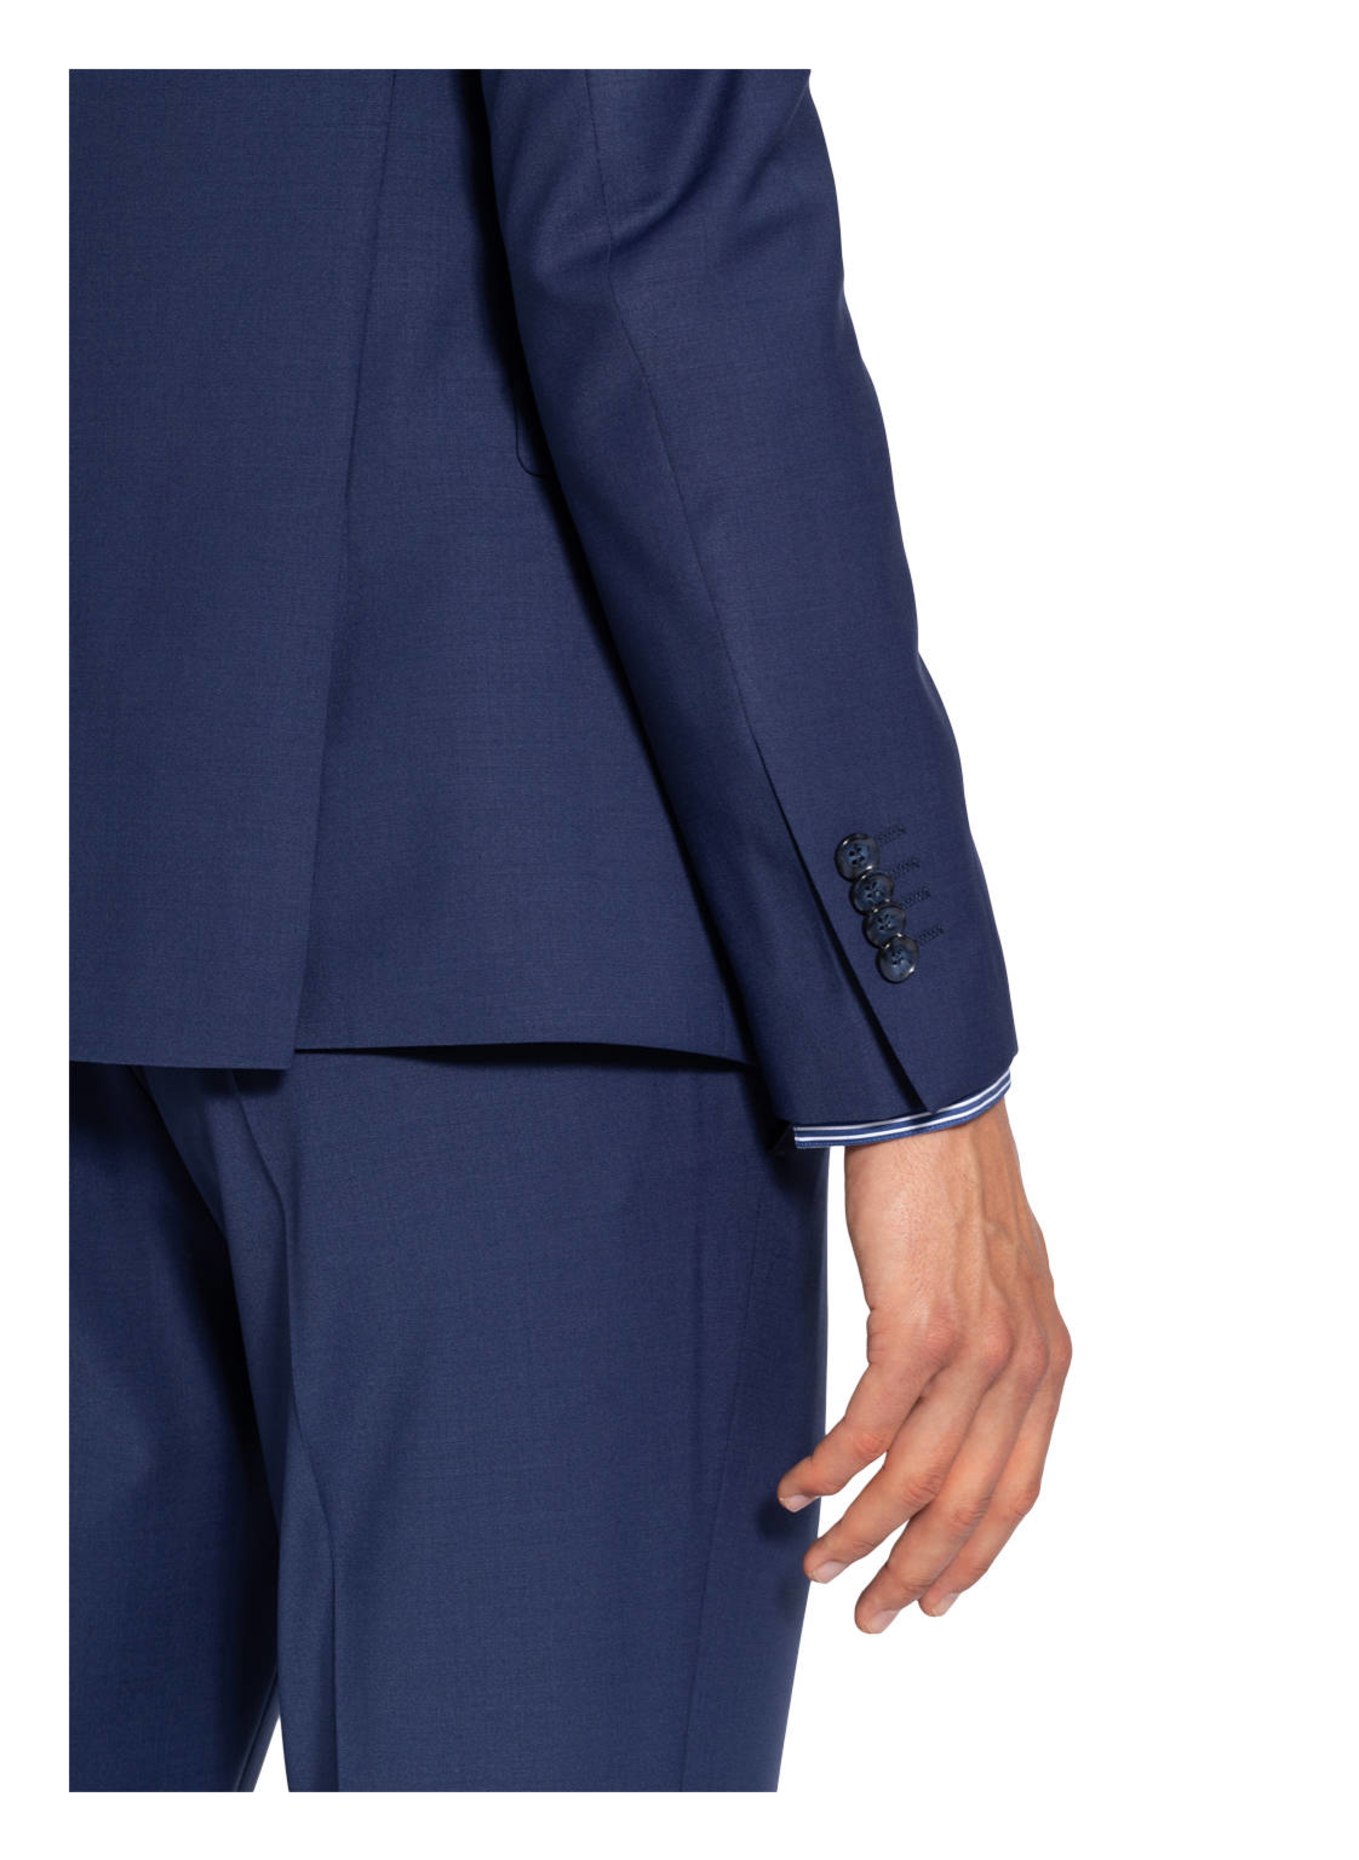 CINQUE Anzugsakko CICASTELLO Super Slim Fit, Farbe: 65 BLAU (Bild 5)